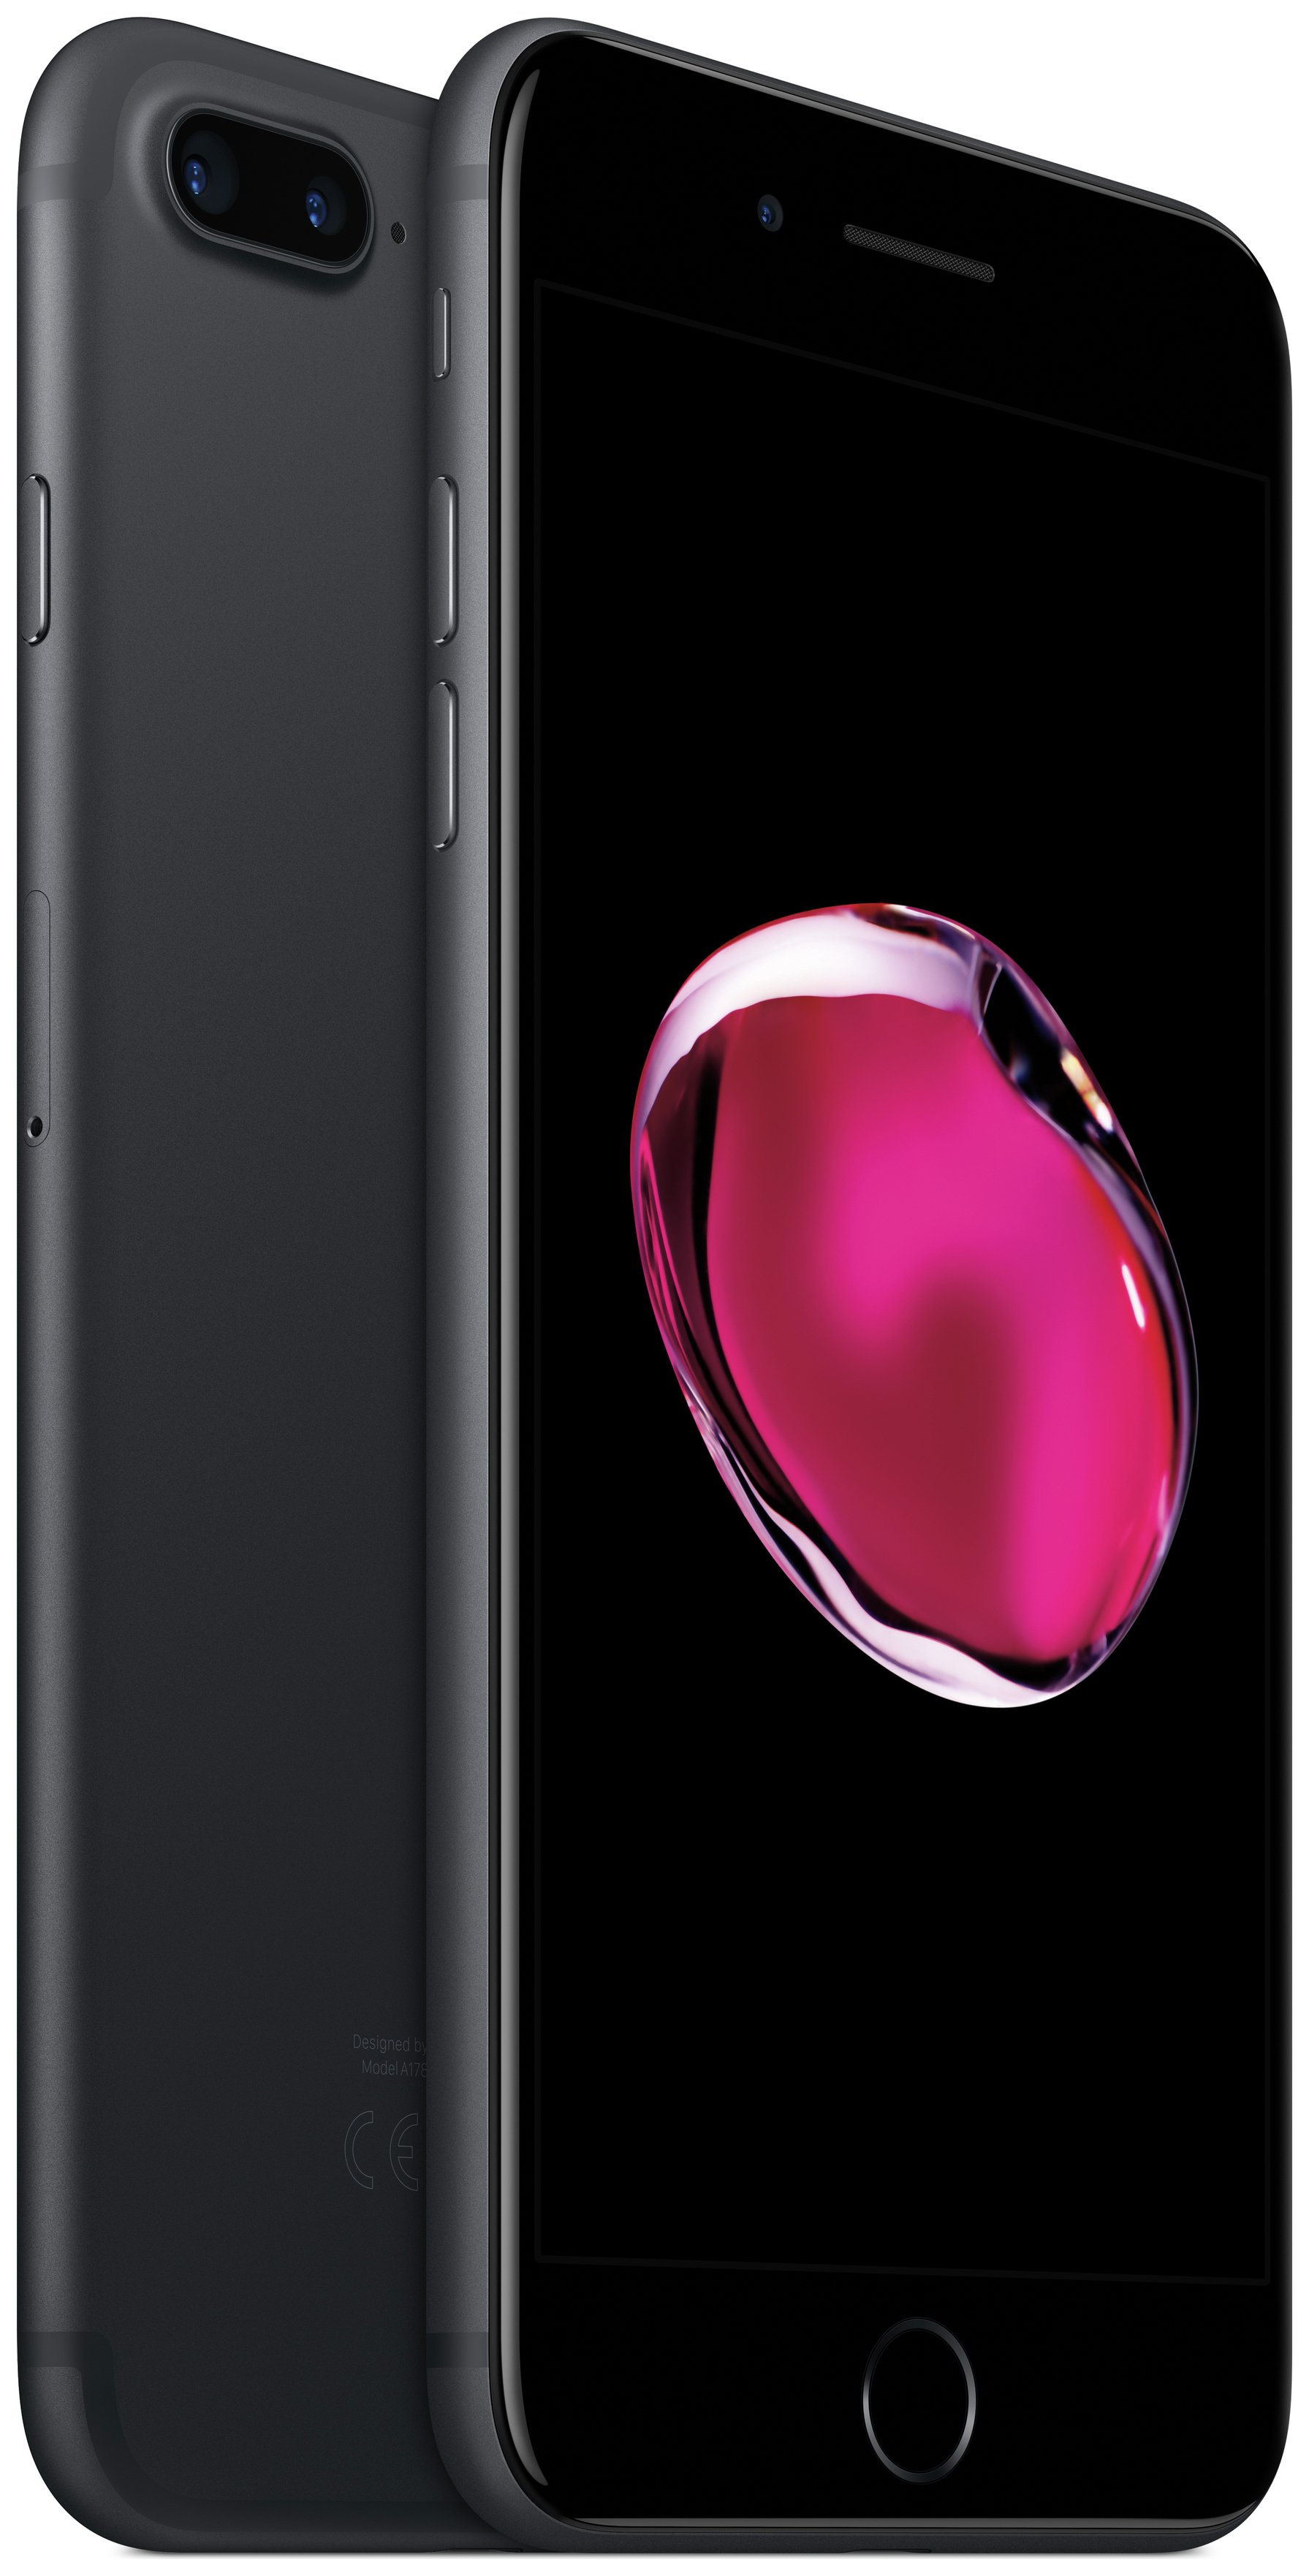 SIM Free iPhone 7 Plus 32GB Mobile Phone - Black